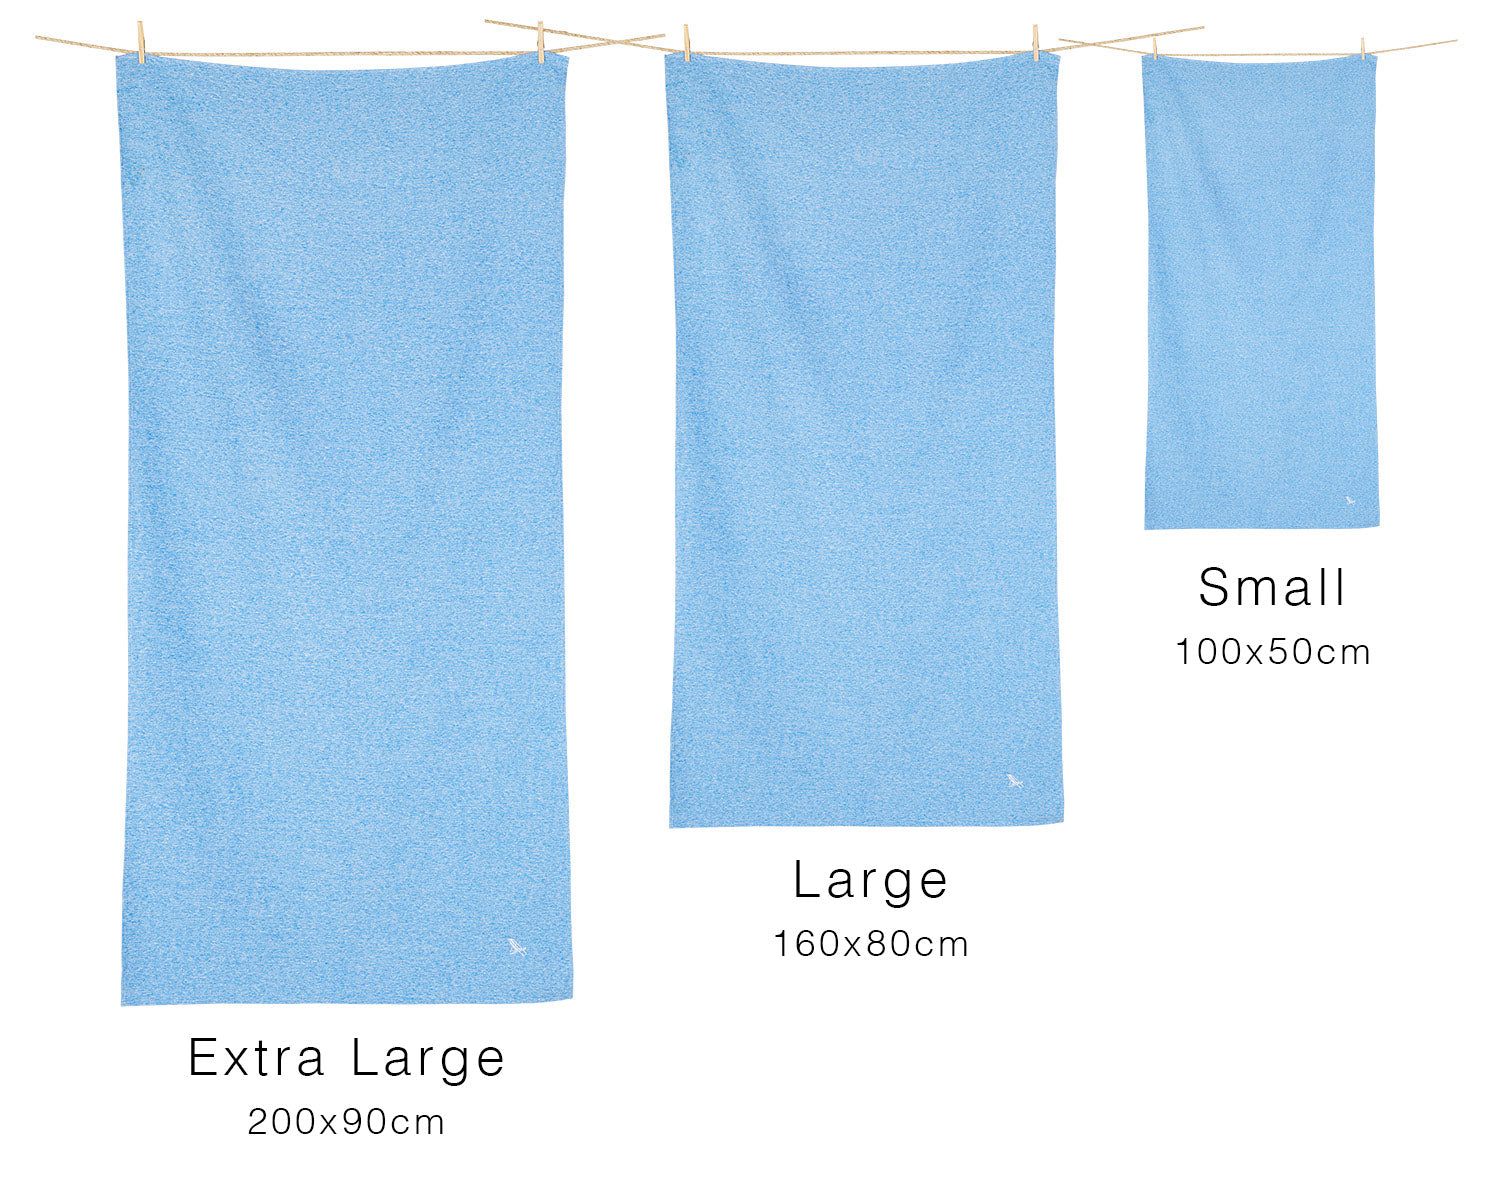 Dock & Bay towel size guide – Dock & Bay US